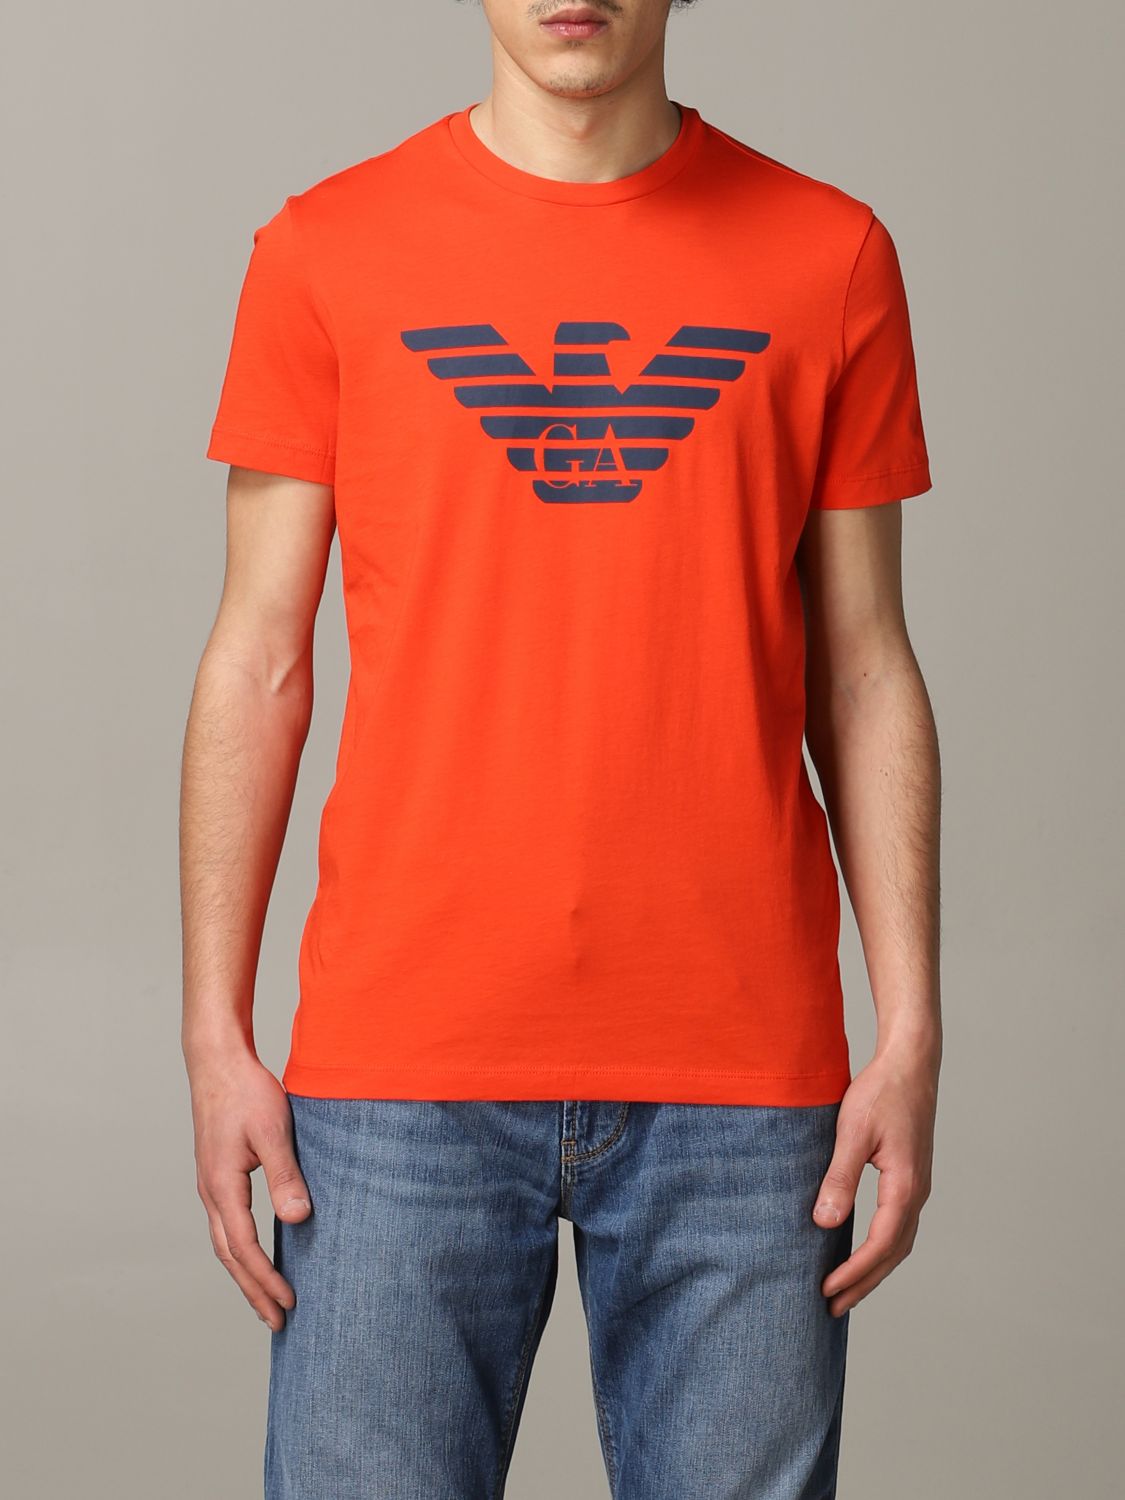 armani t shirt orange